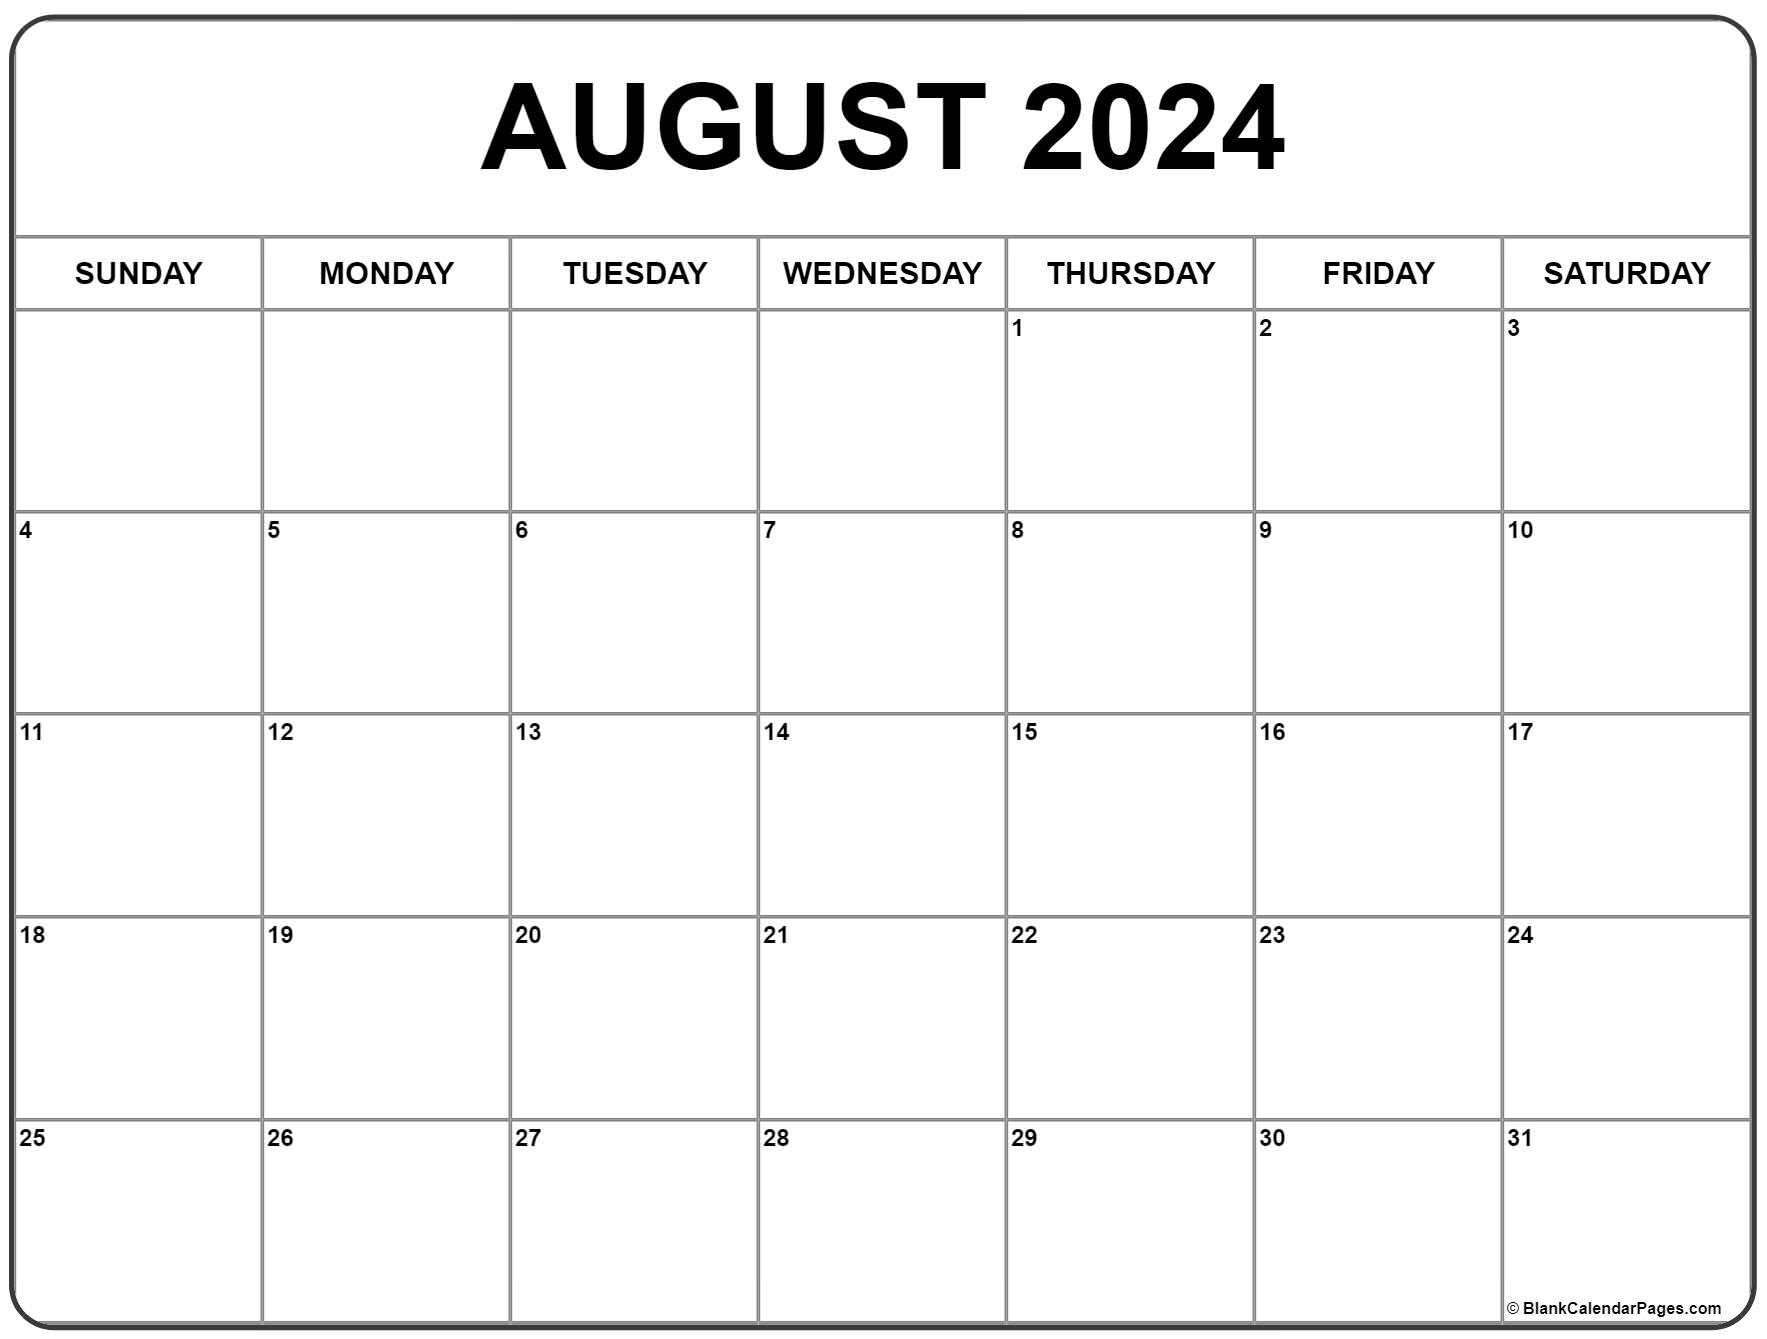 August 2024 Calendar | Free Printable Calendar for Printable Calendar 2024 August